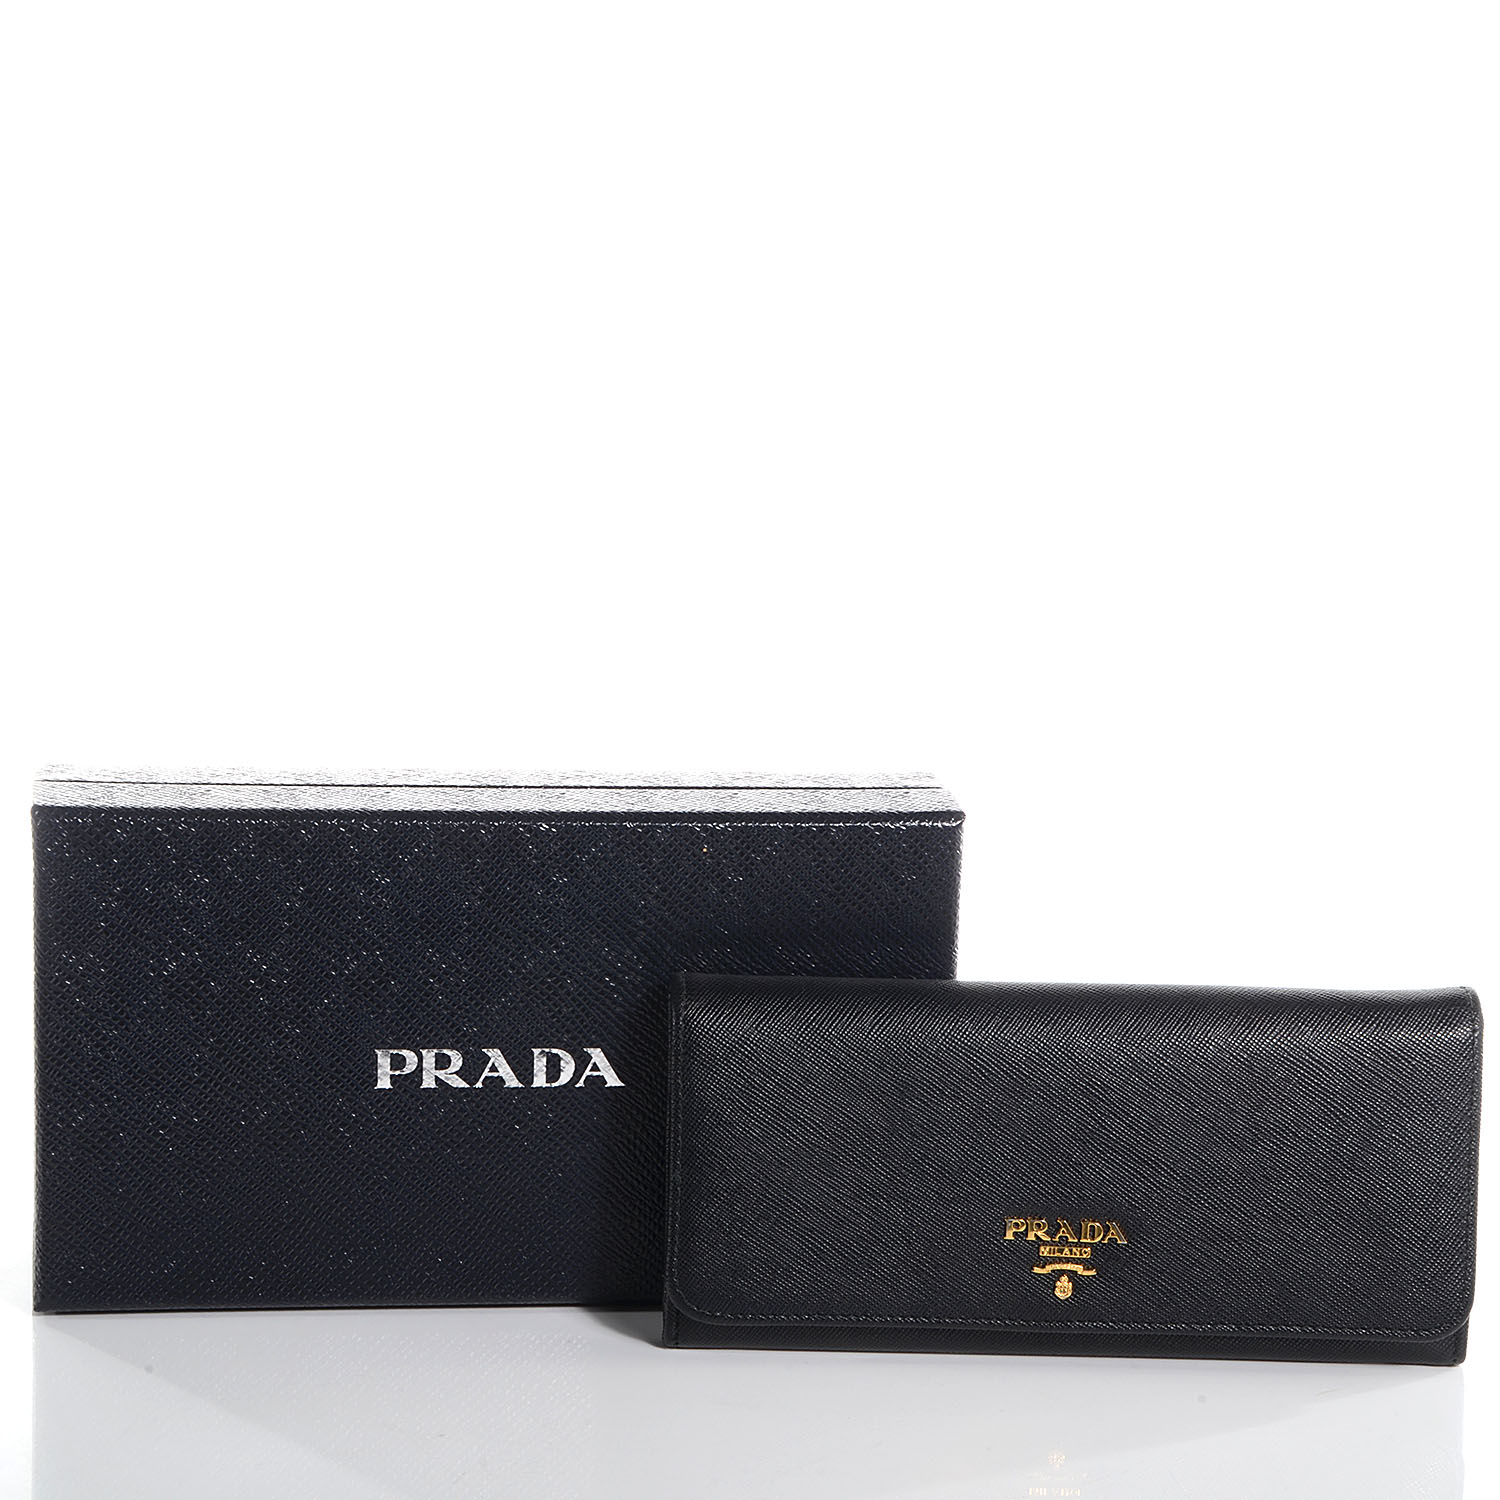 PRADA Saffiano Metal Continental Flap Wallet Nero Black 78124